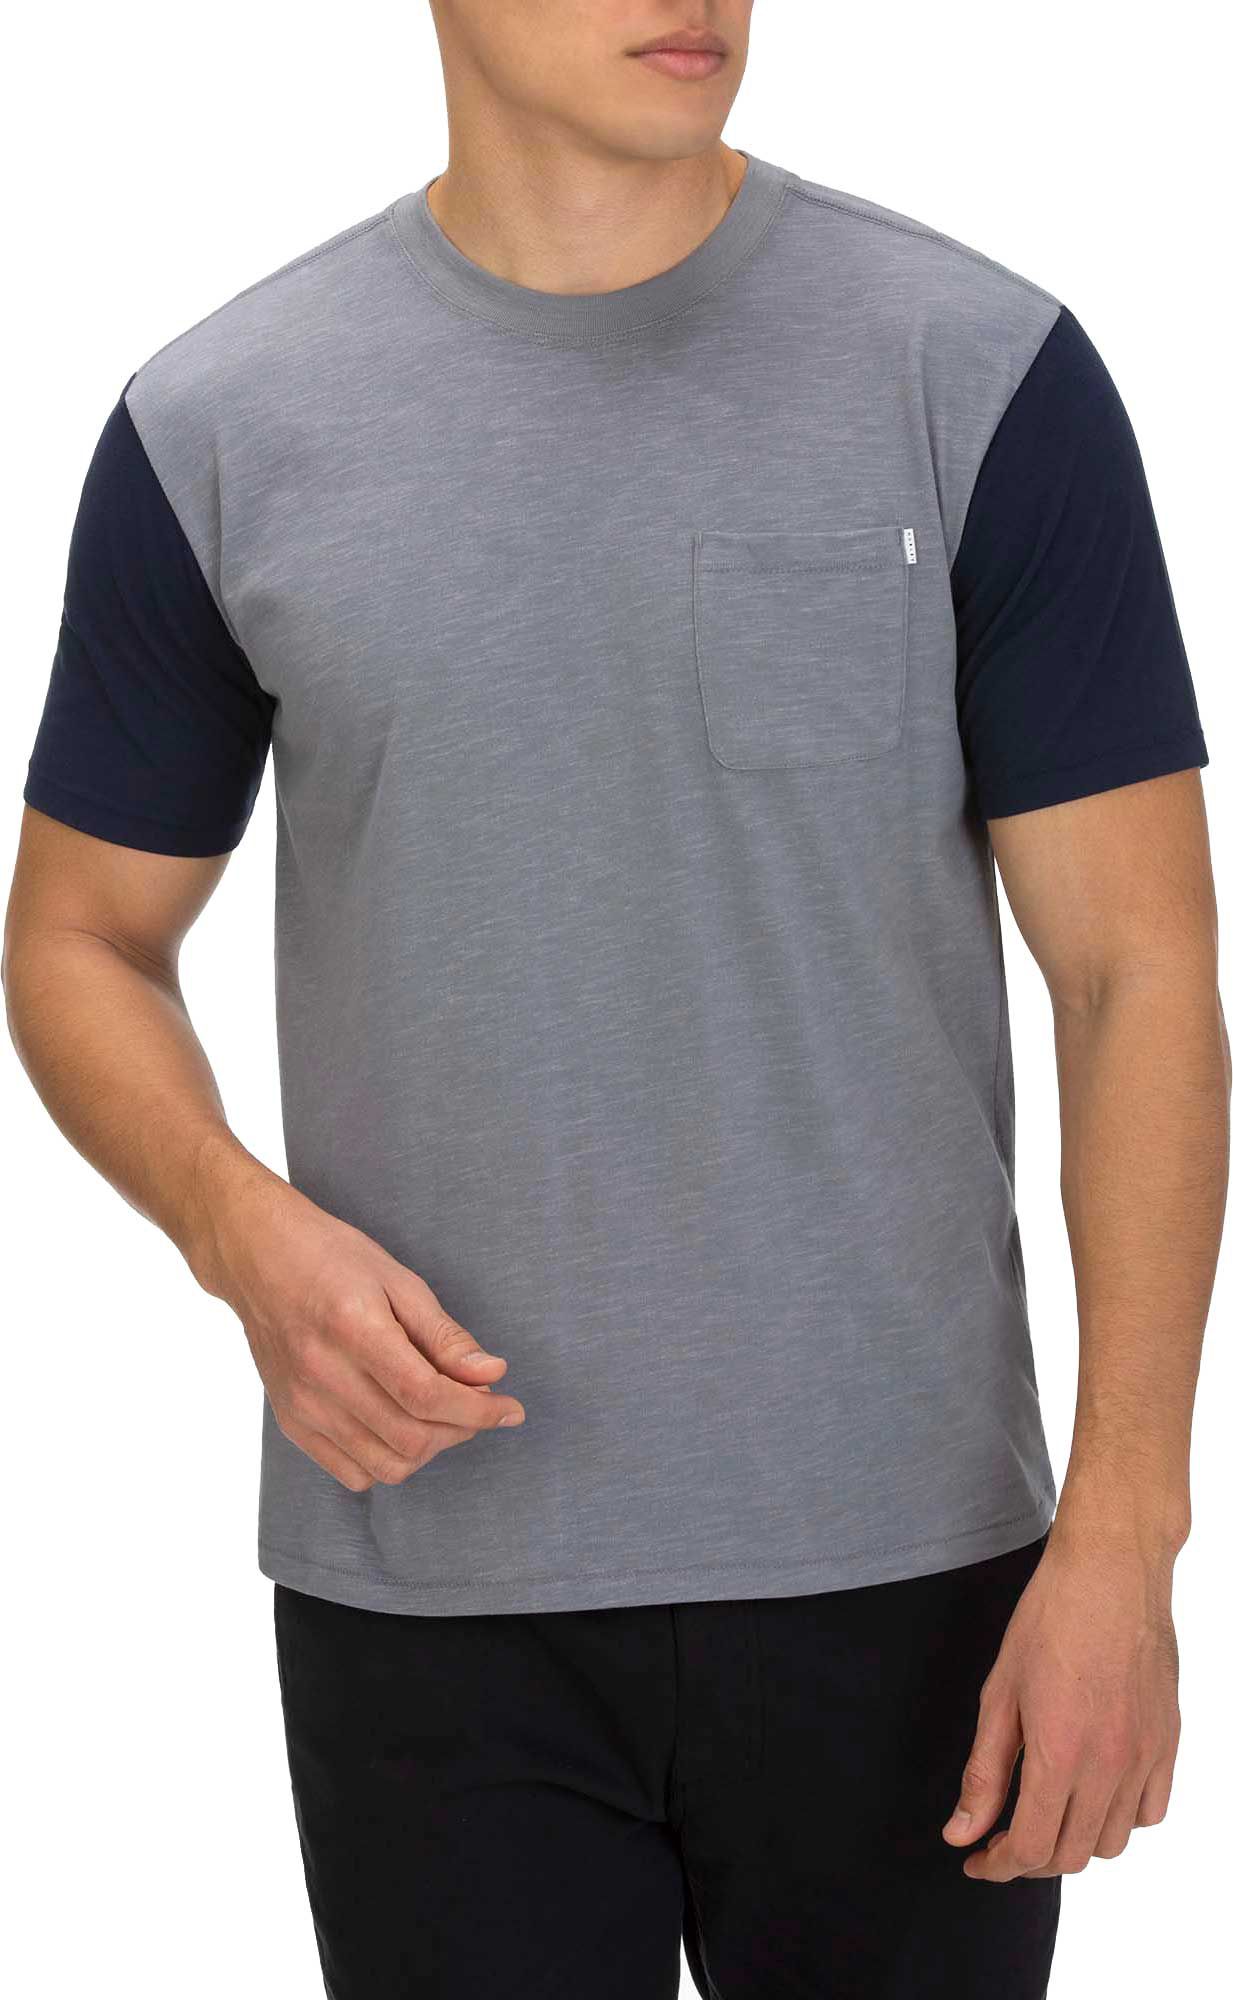 dri fit shirts with pockets